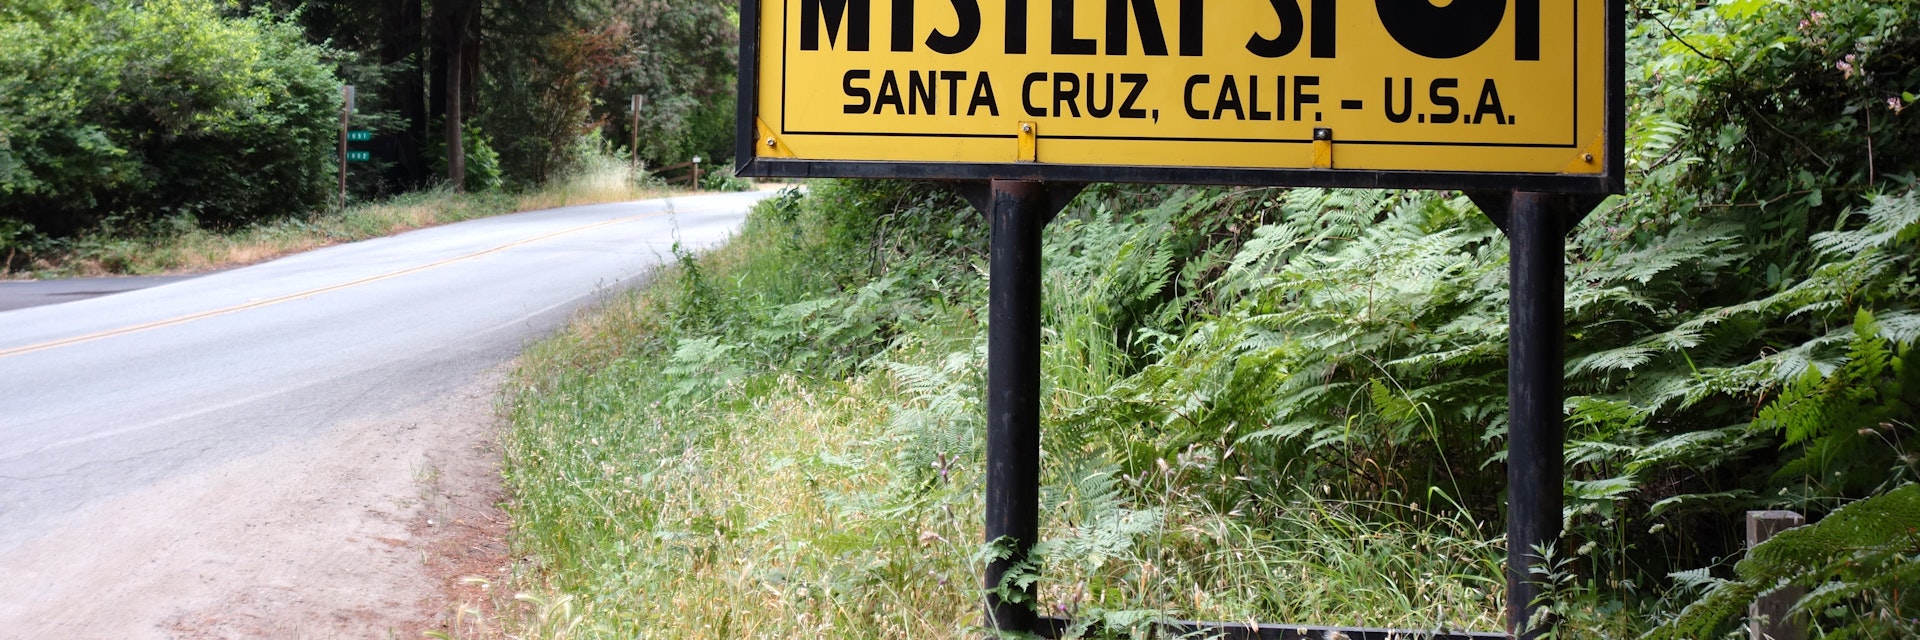 The Mystery Spot, Santa Cruz, California USA